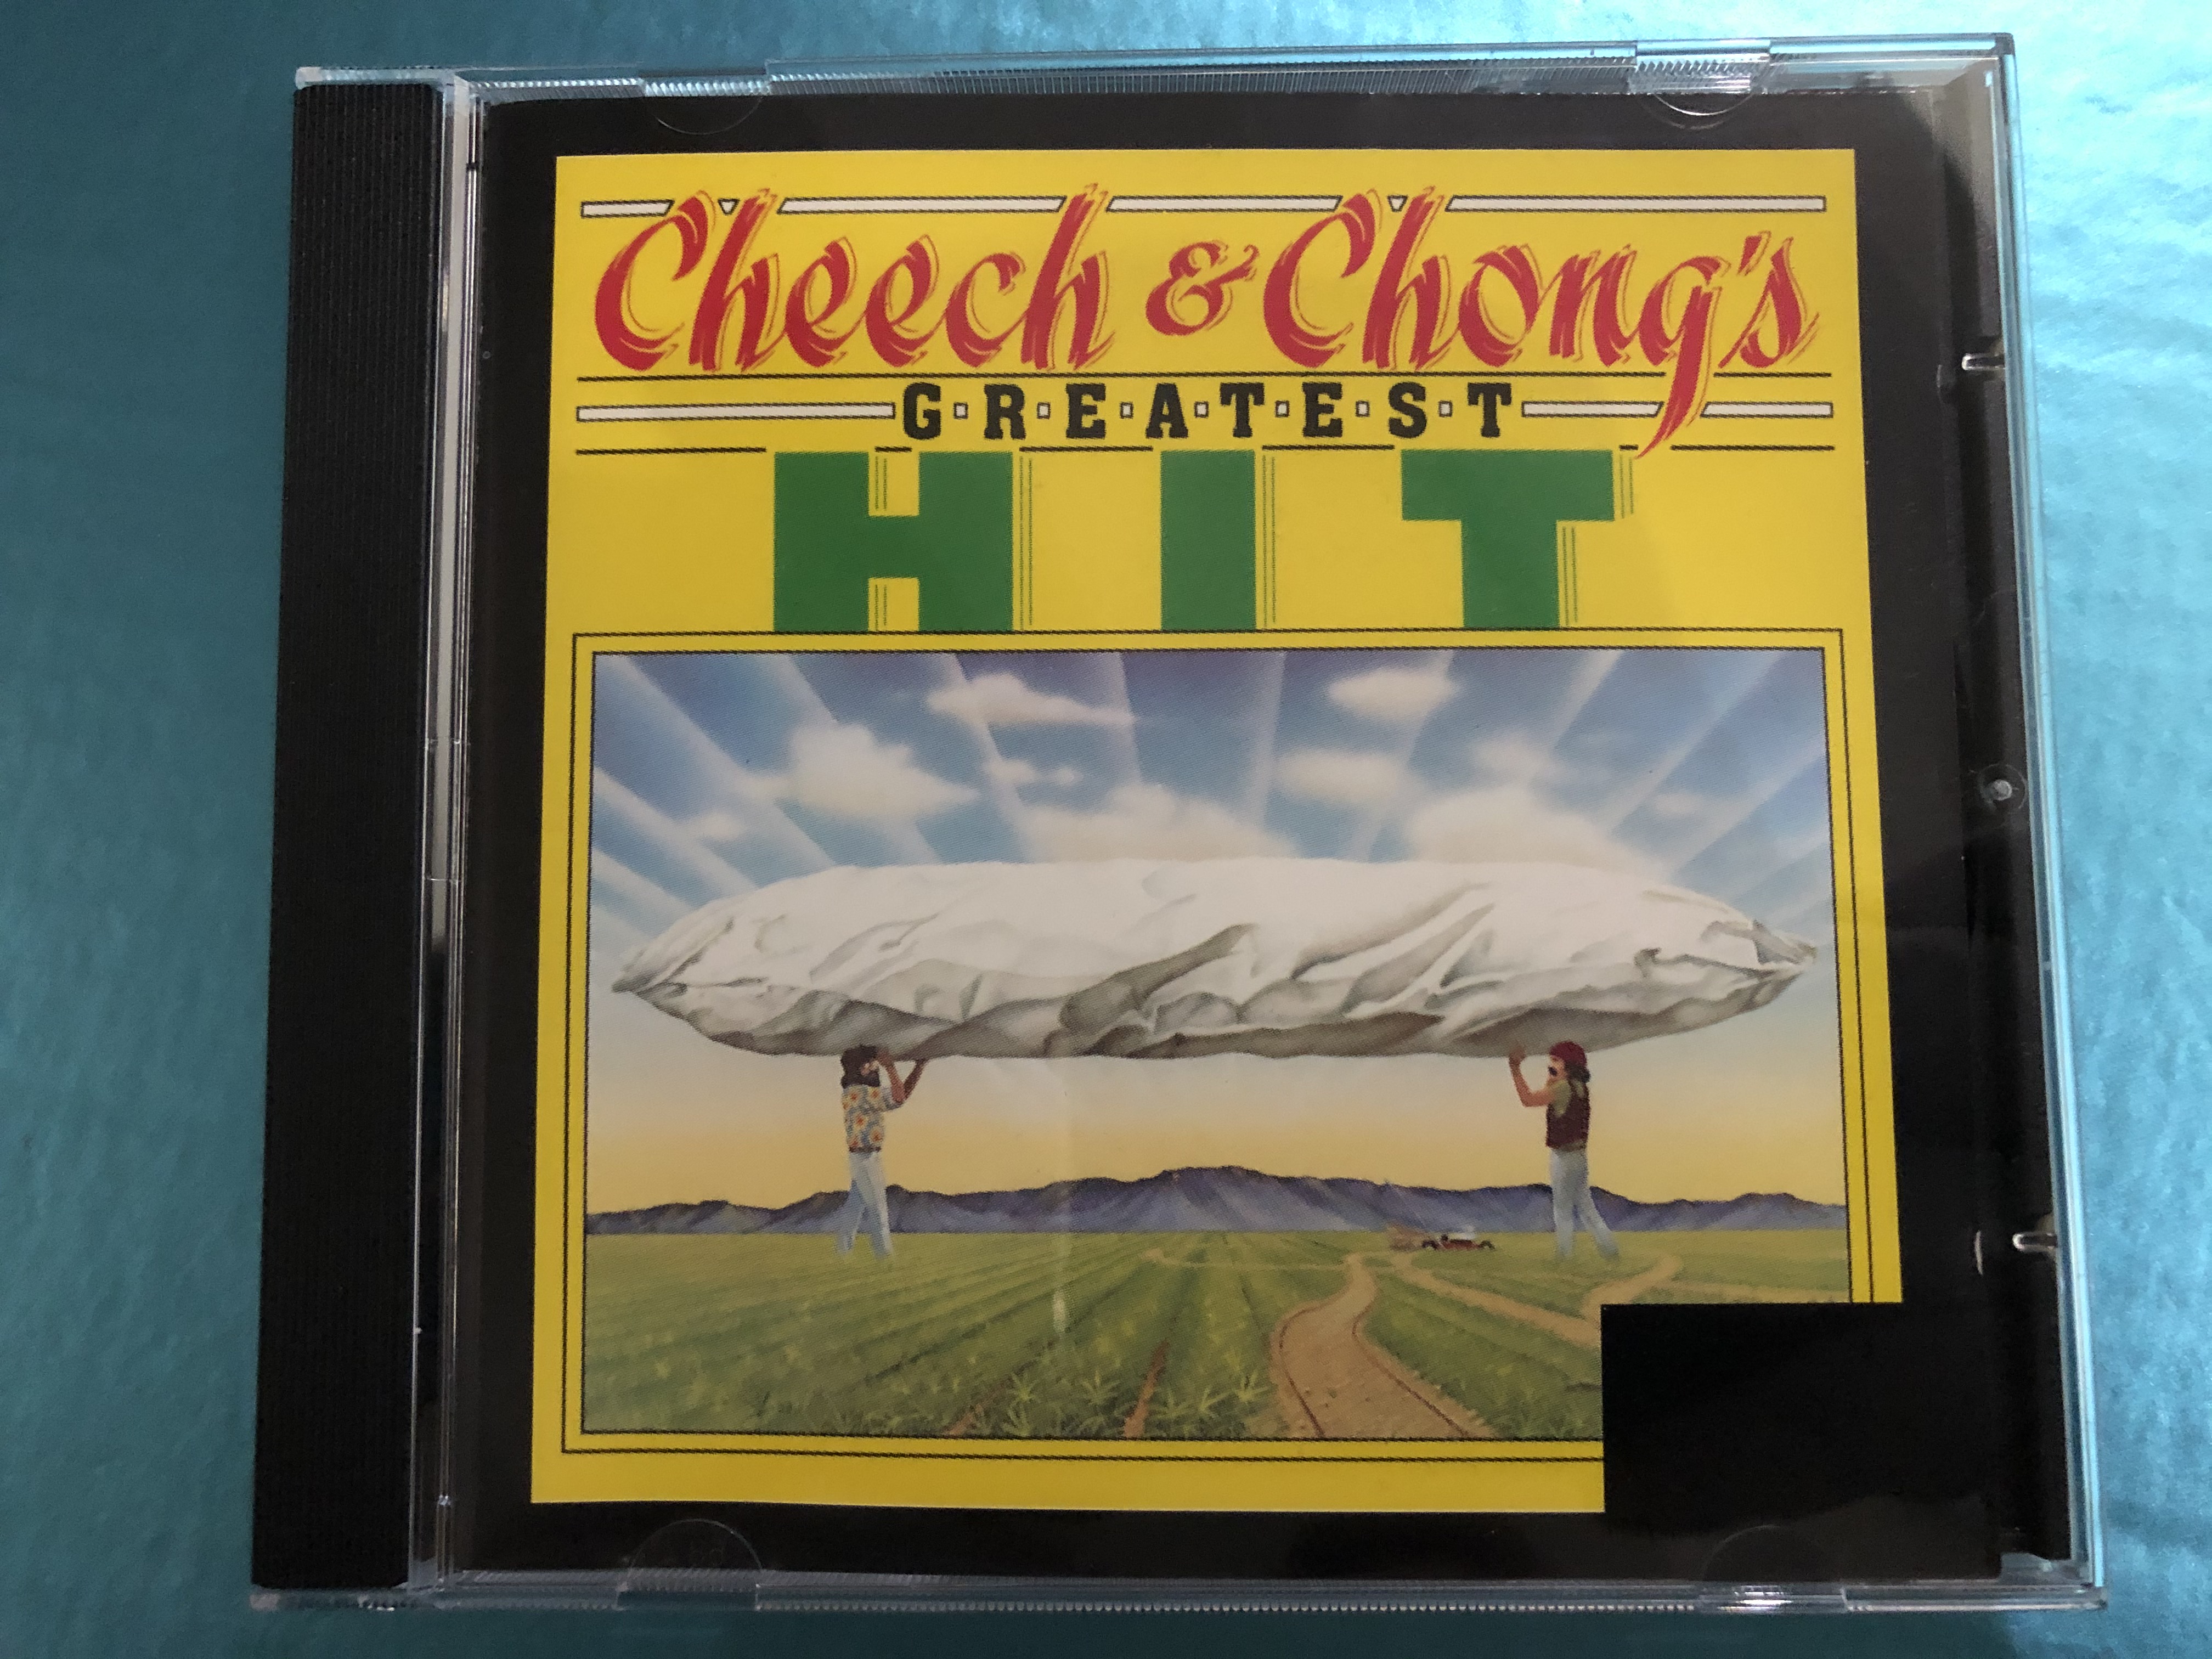 cheech-chong-s-greatest-hit-warner-bros.-records-audio-cd-1991-7599-23614-2-1-.jpg